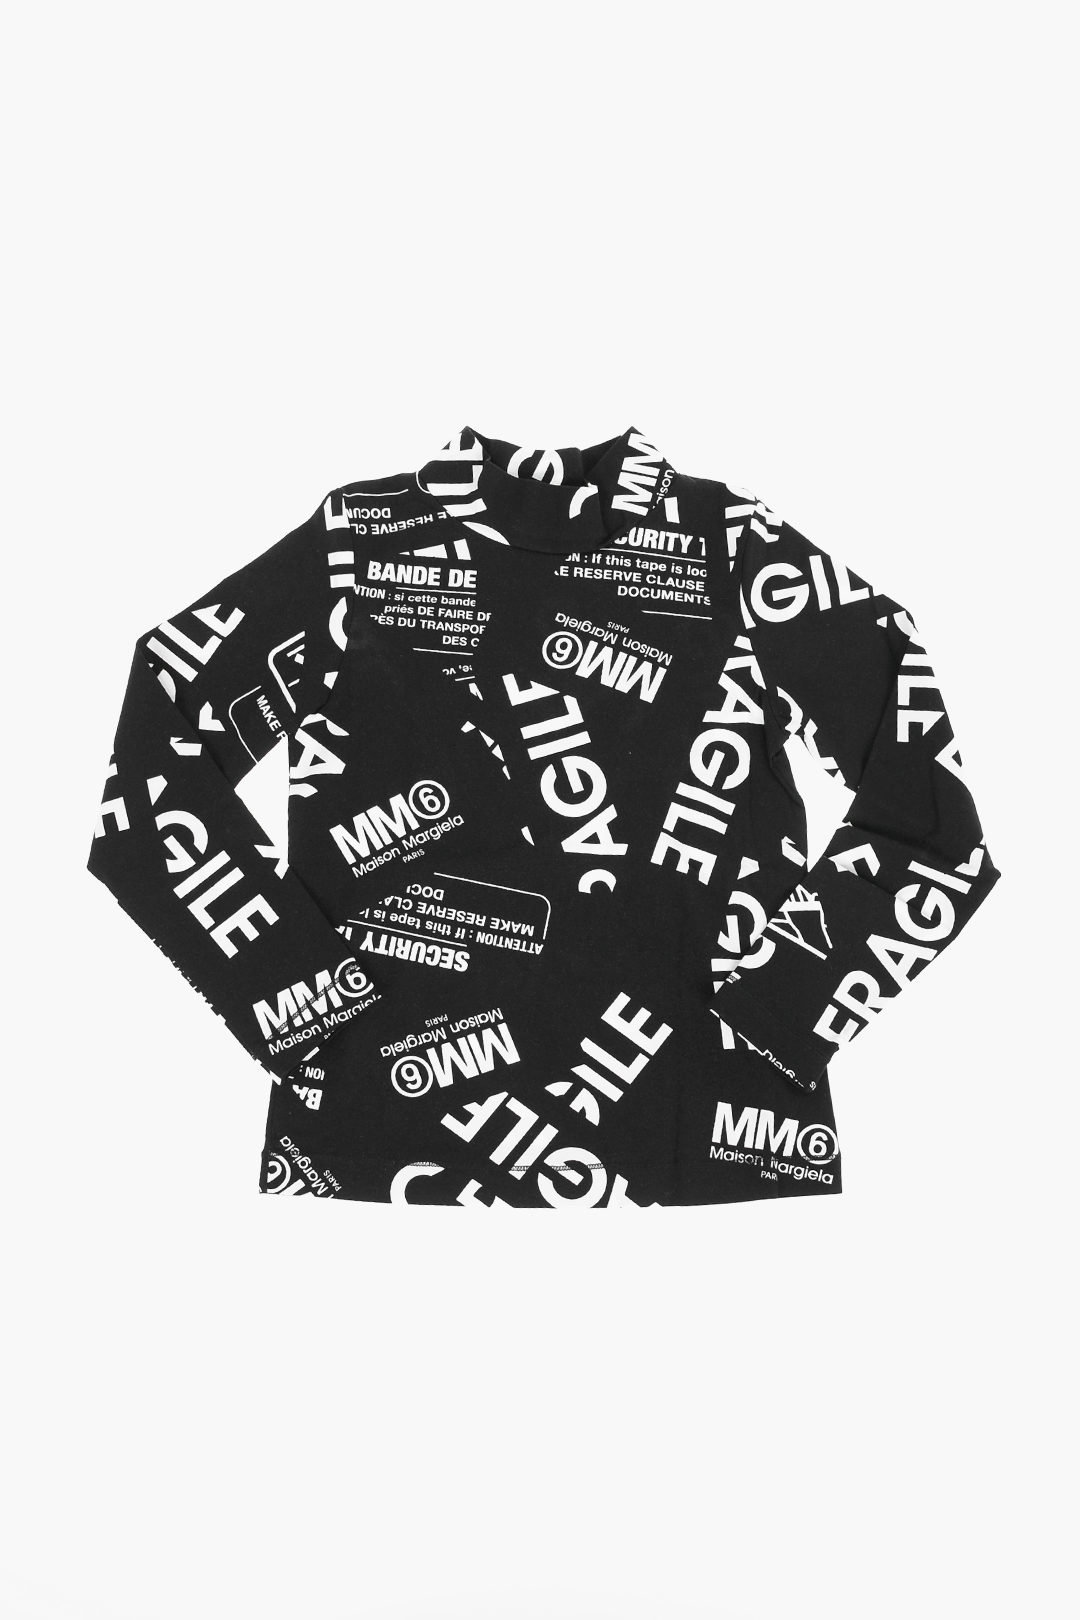 MM6 all over logo long sleeve t-shirt